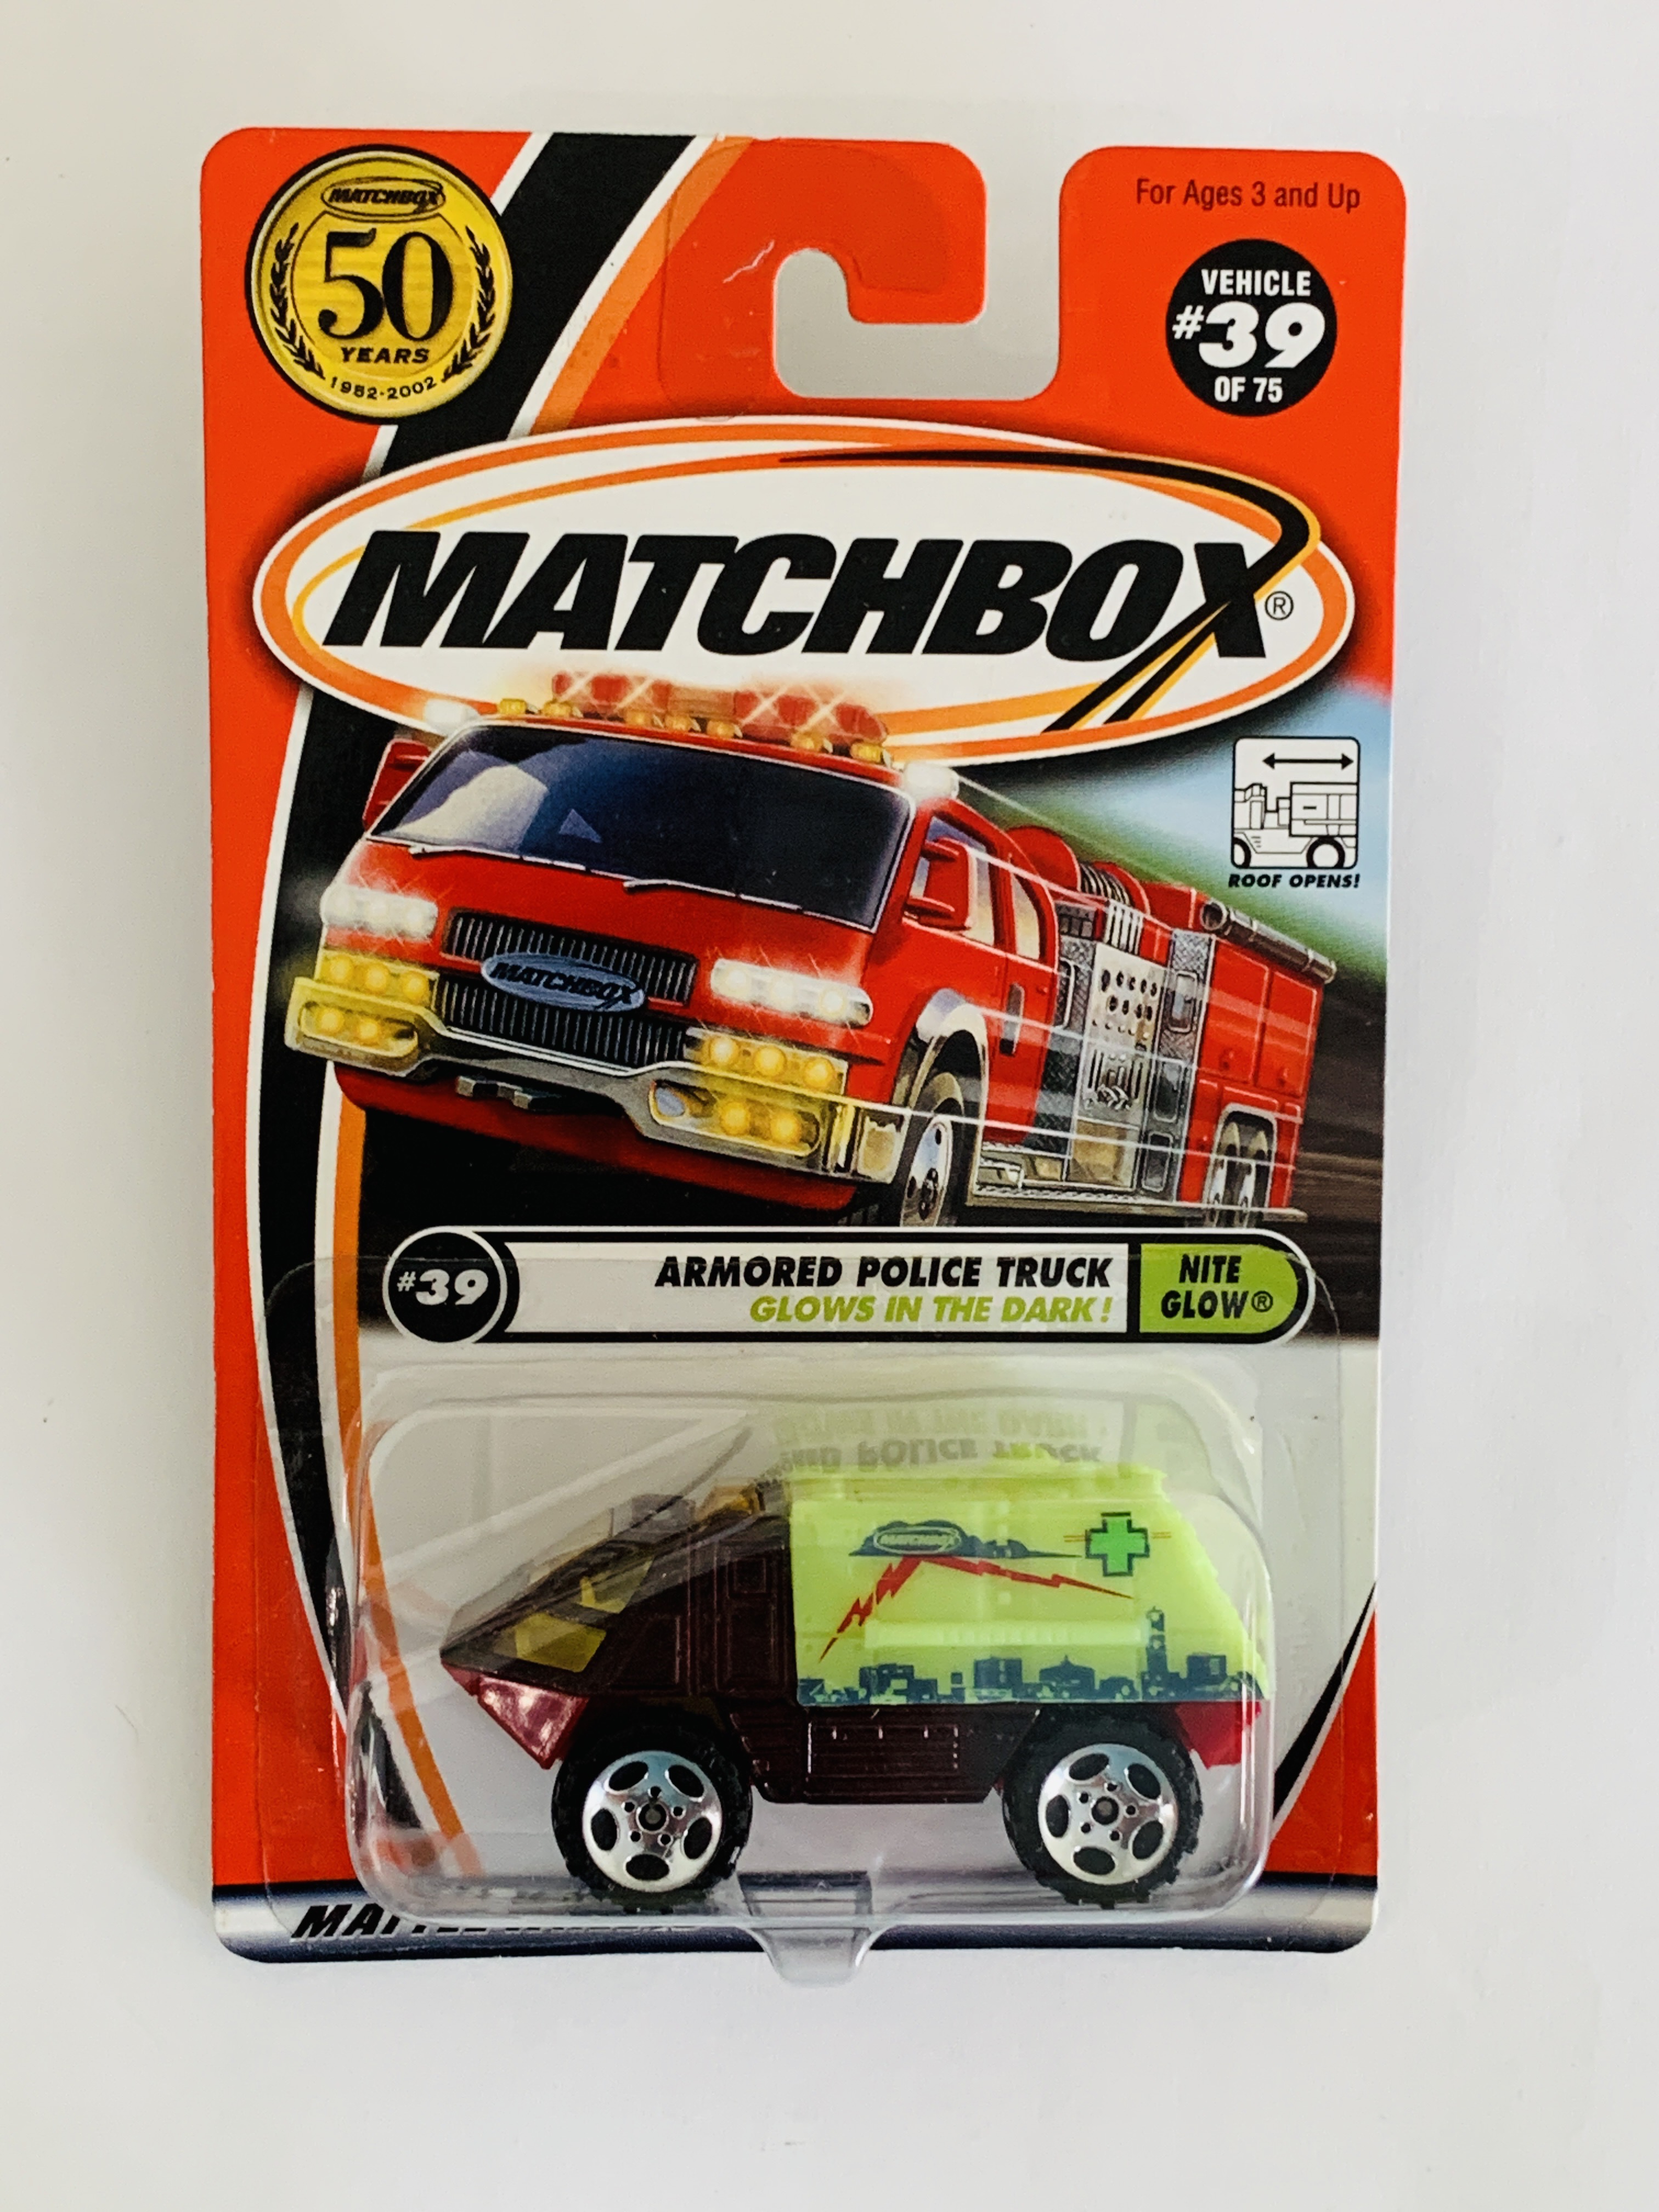 Matchbox #39 Aromred Police Truck